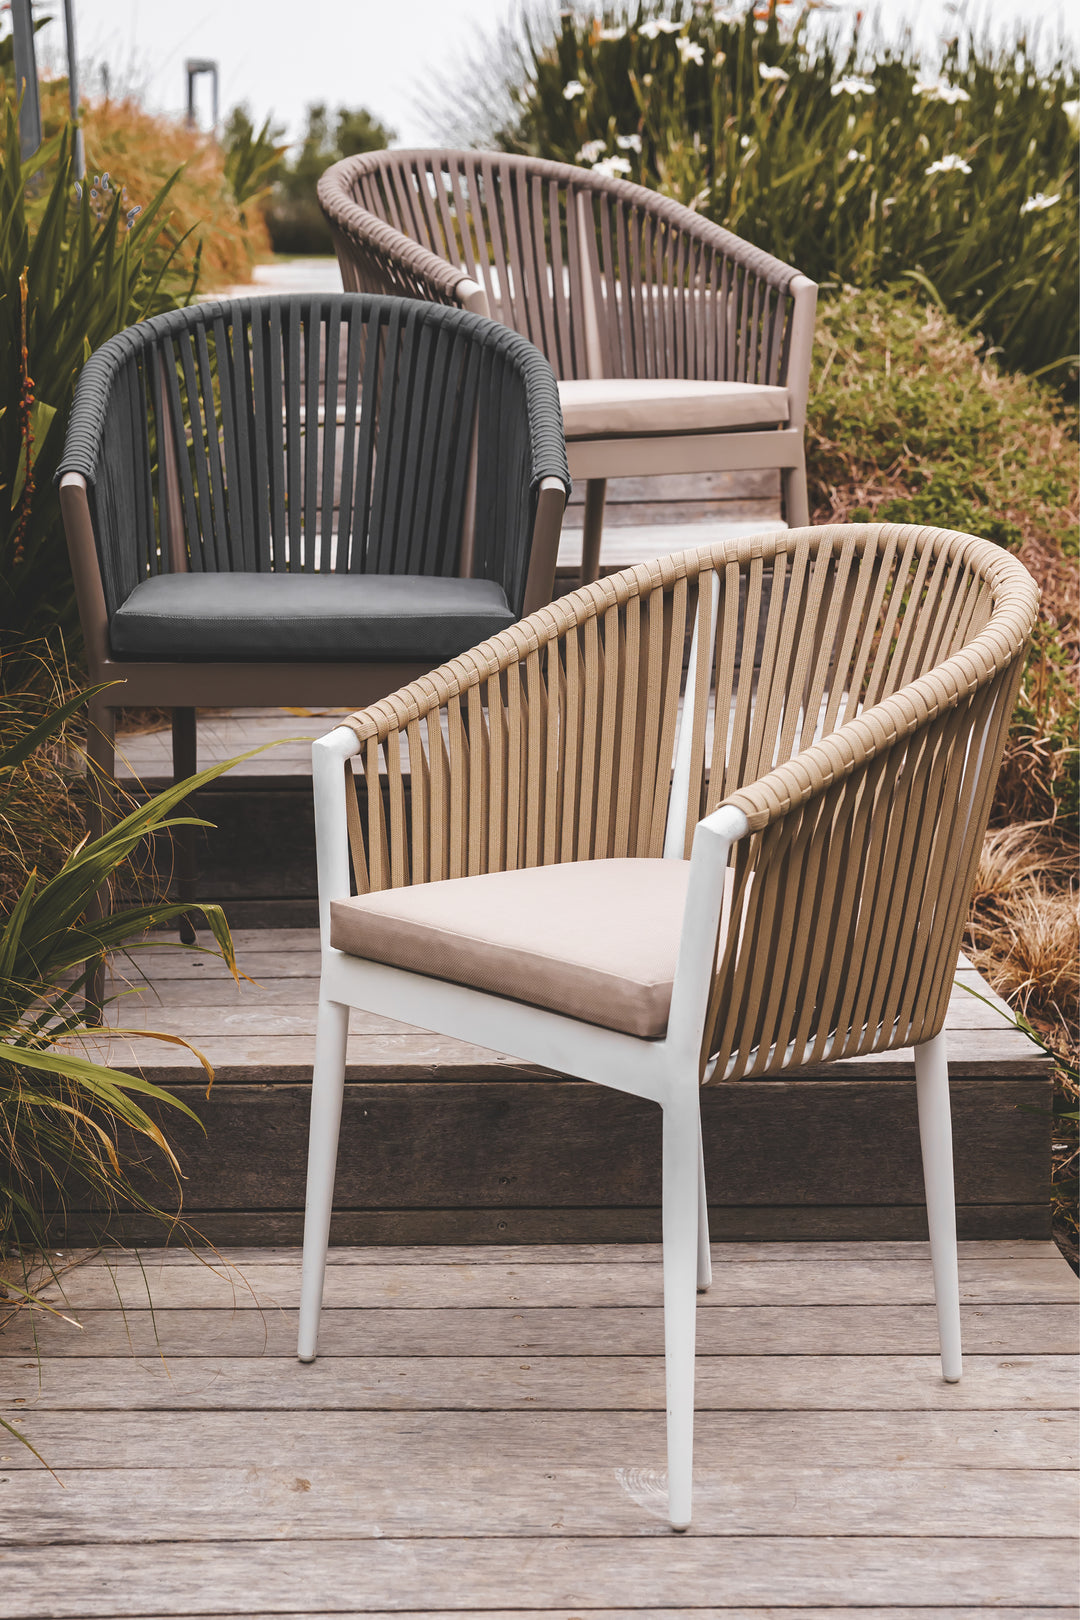 Homeware - Seating - Chairs - Outdoor - Hertex Haus Online